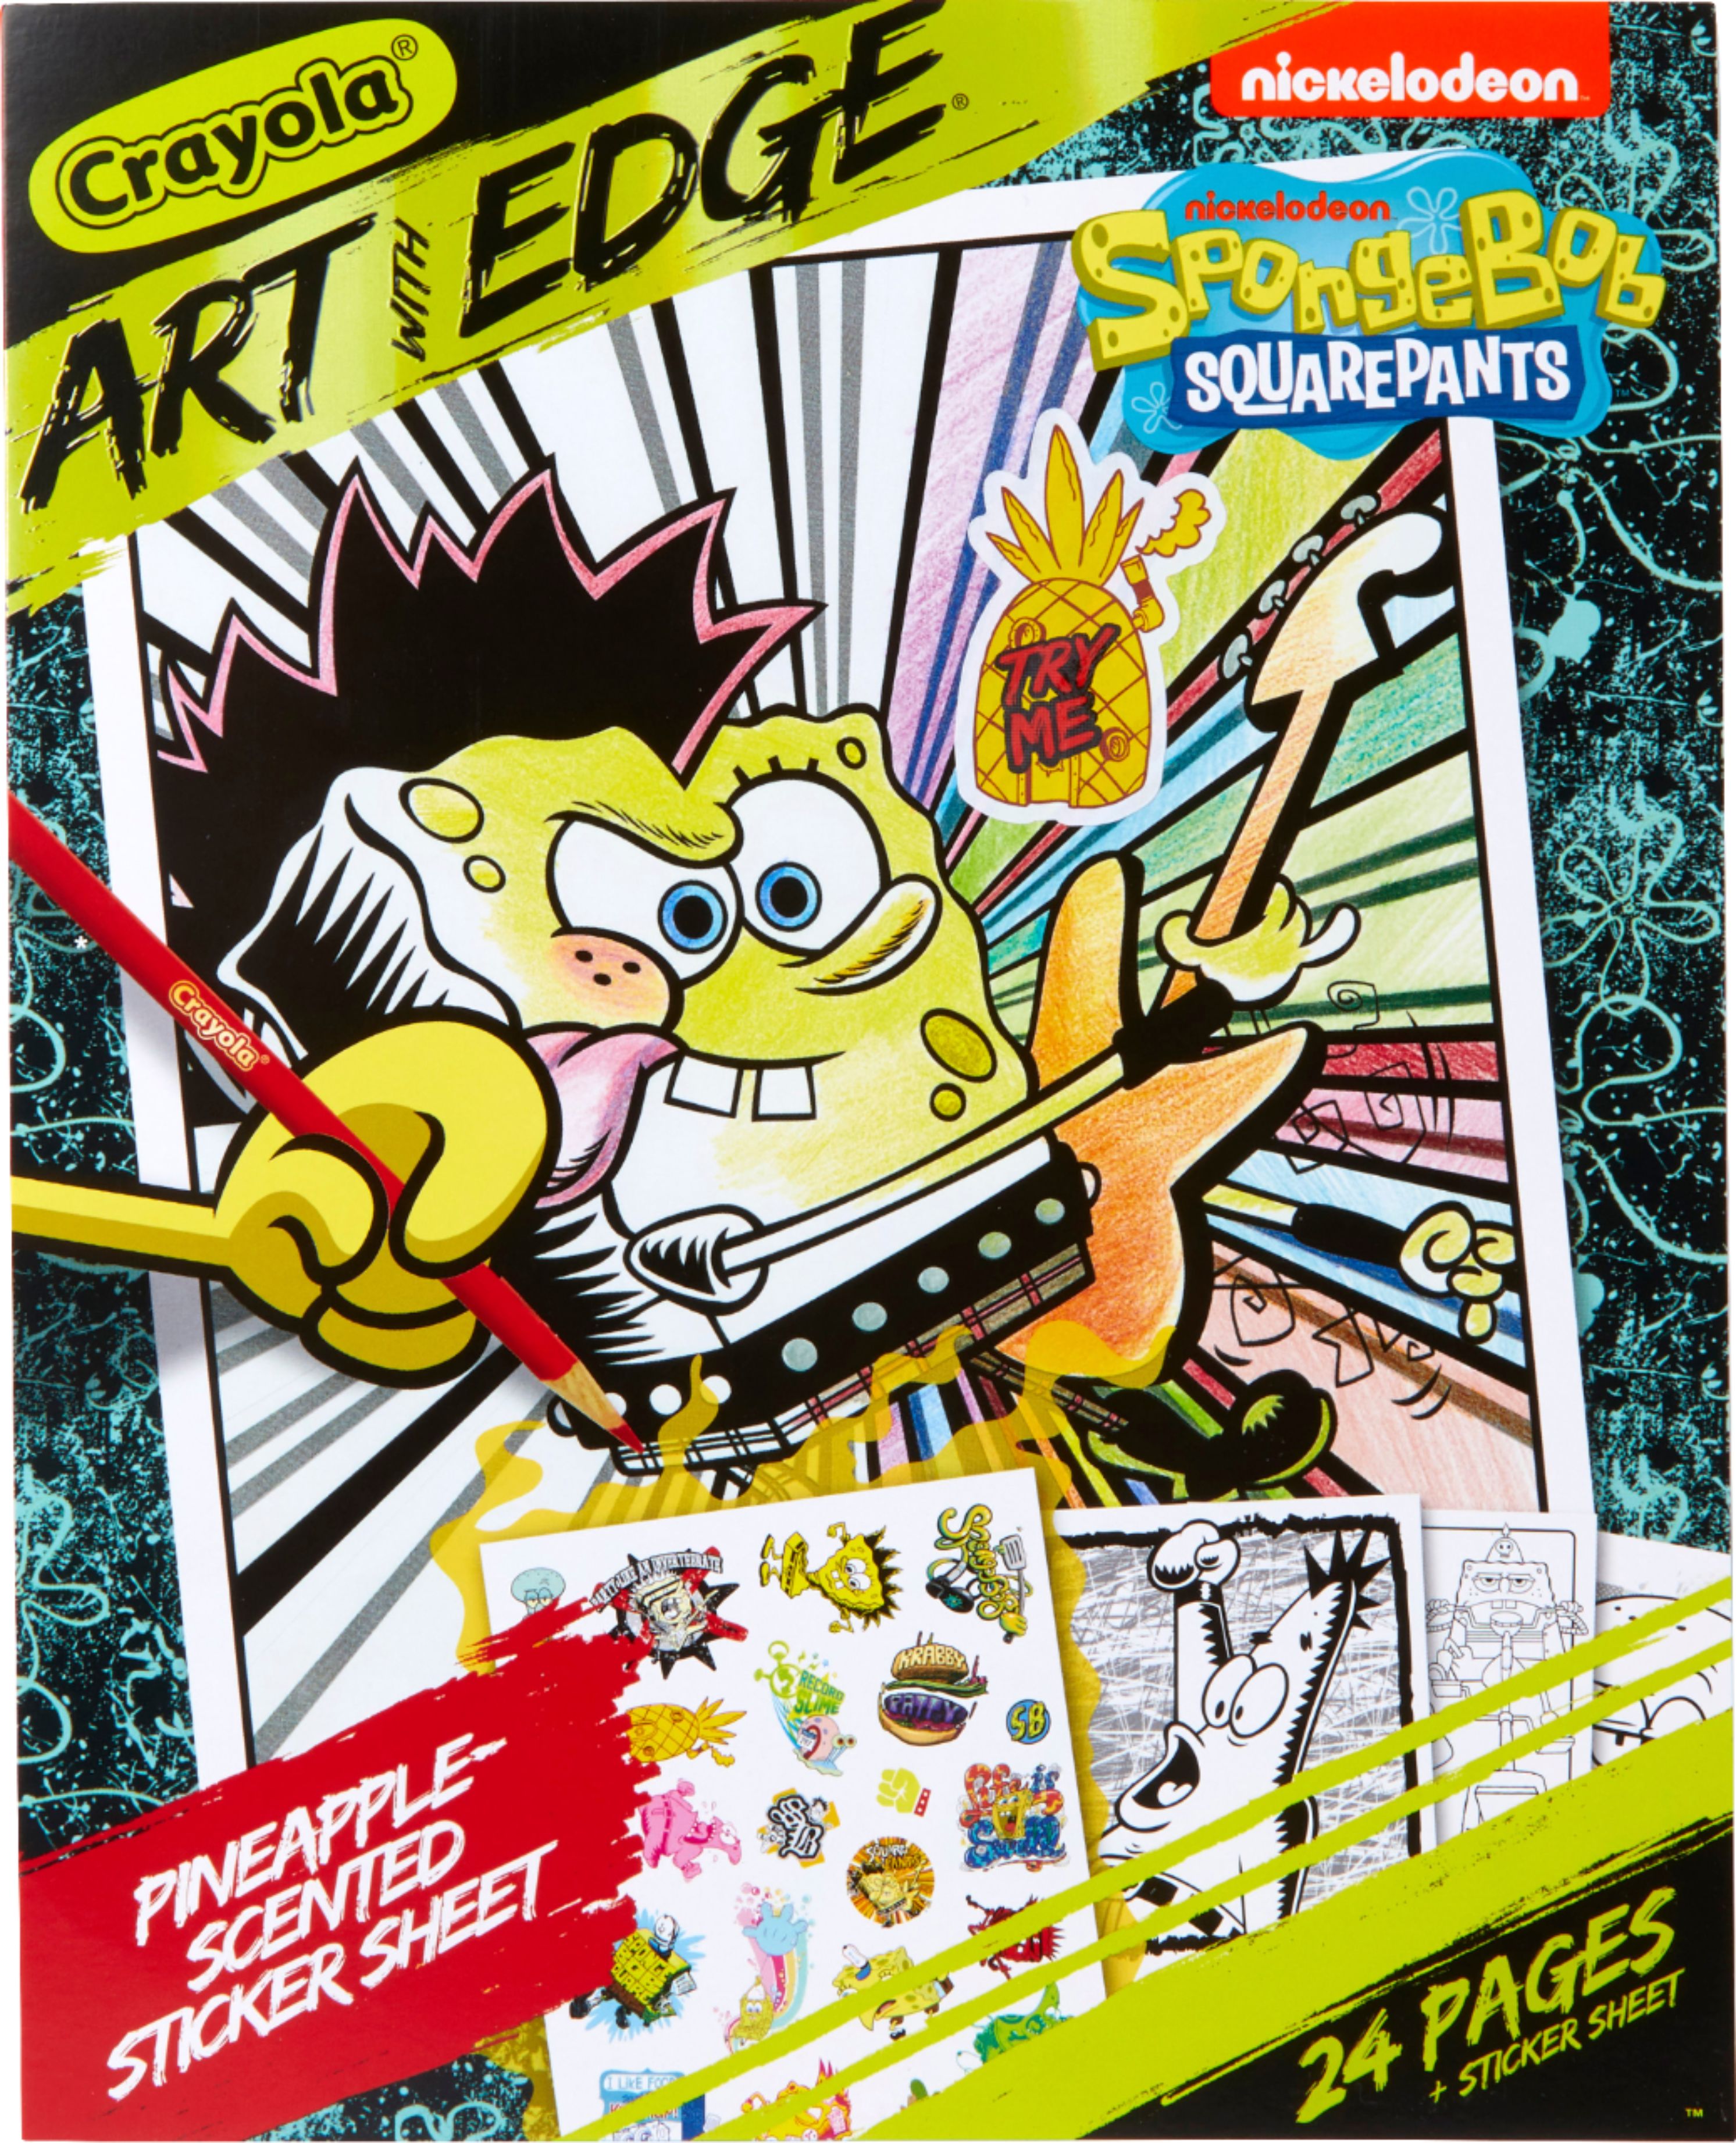 Spongebob Squarepants Coloring Pages Part 2 - Spongebob Coloring Book 